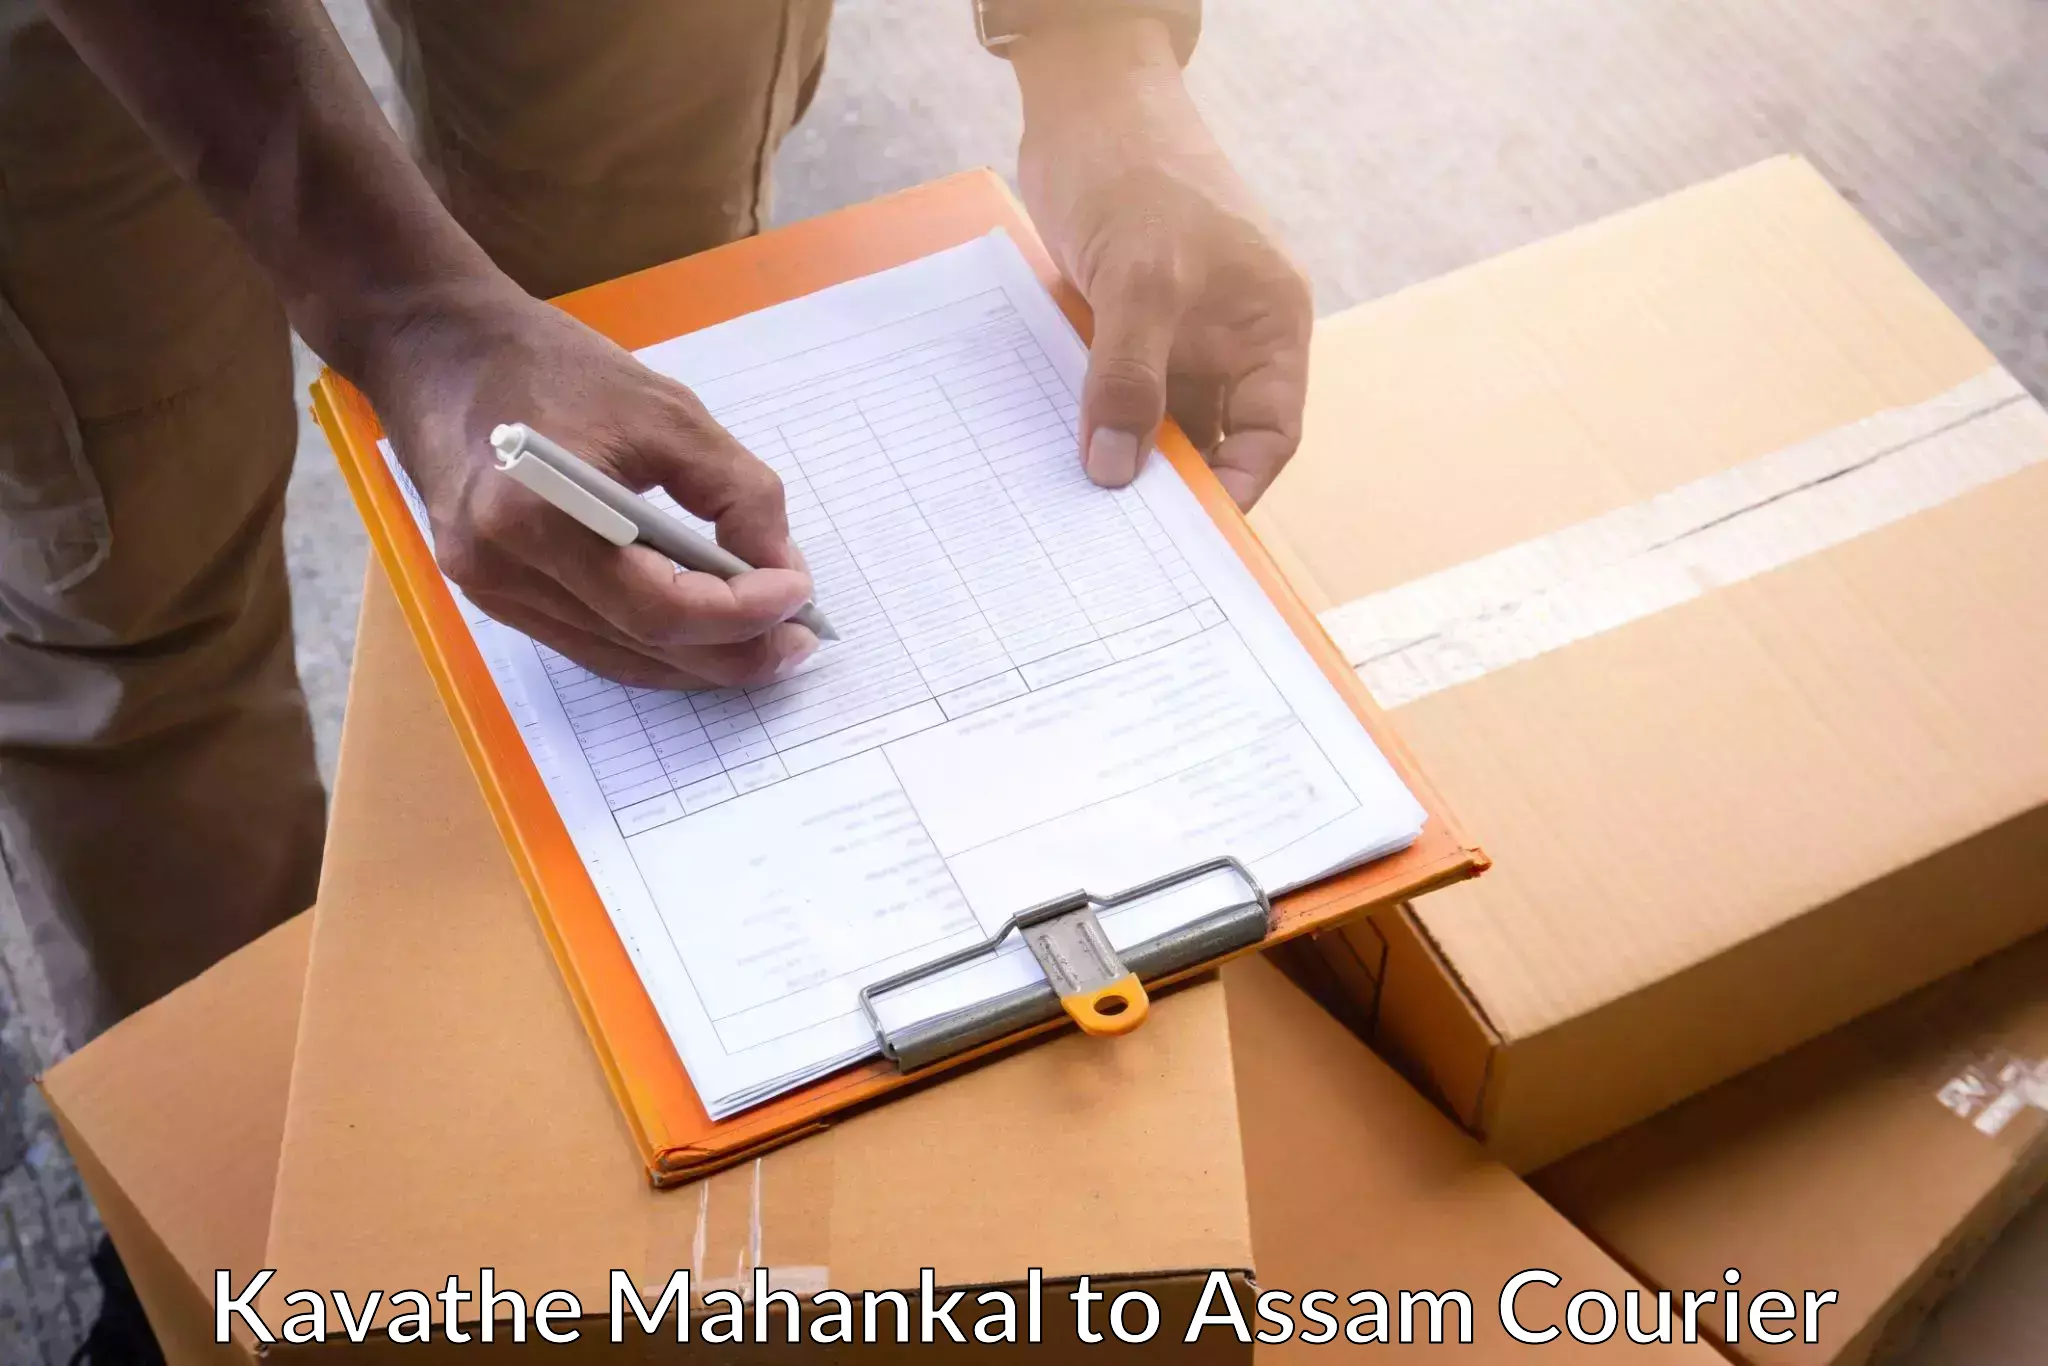 Cargo delivery service Kavathe Mahankal to Assam